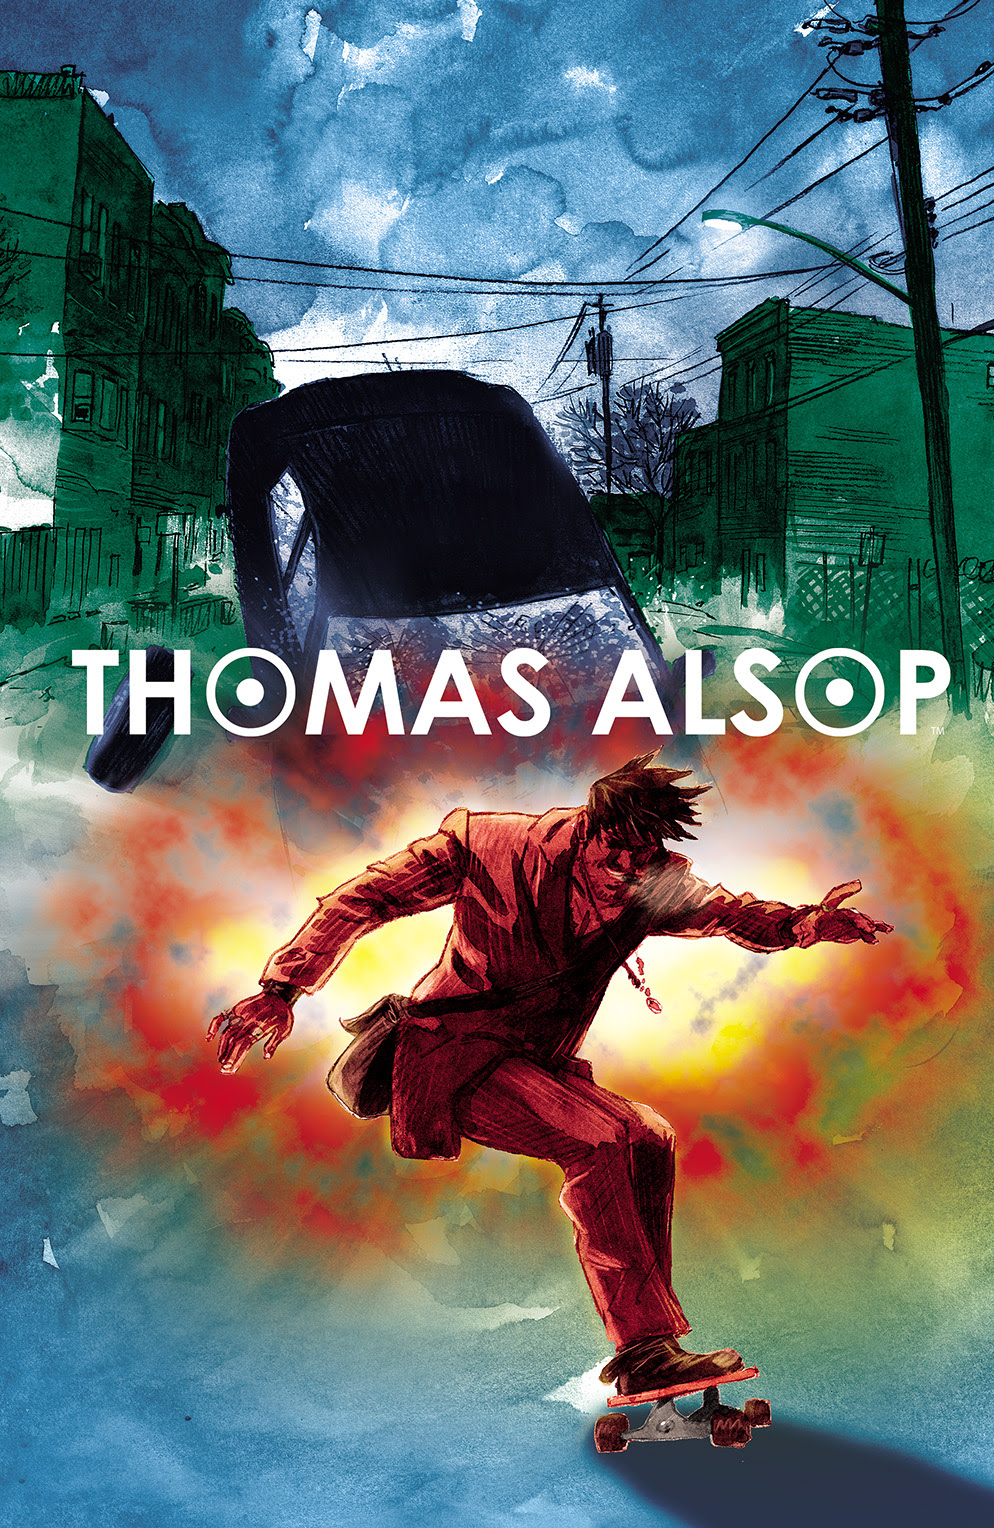 THOMAS ALSOP #7 Cover by Palle Schmidt